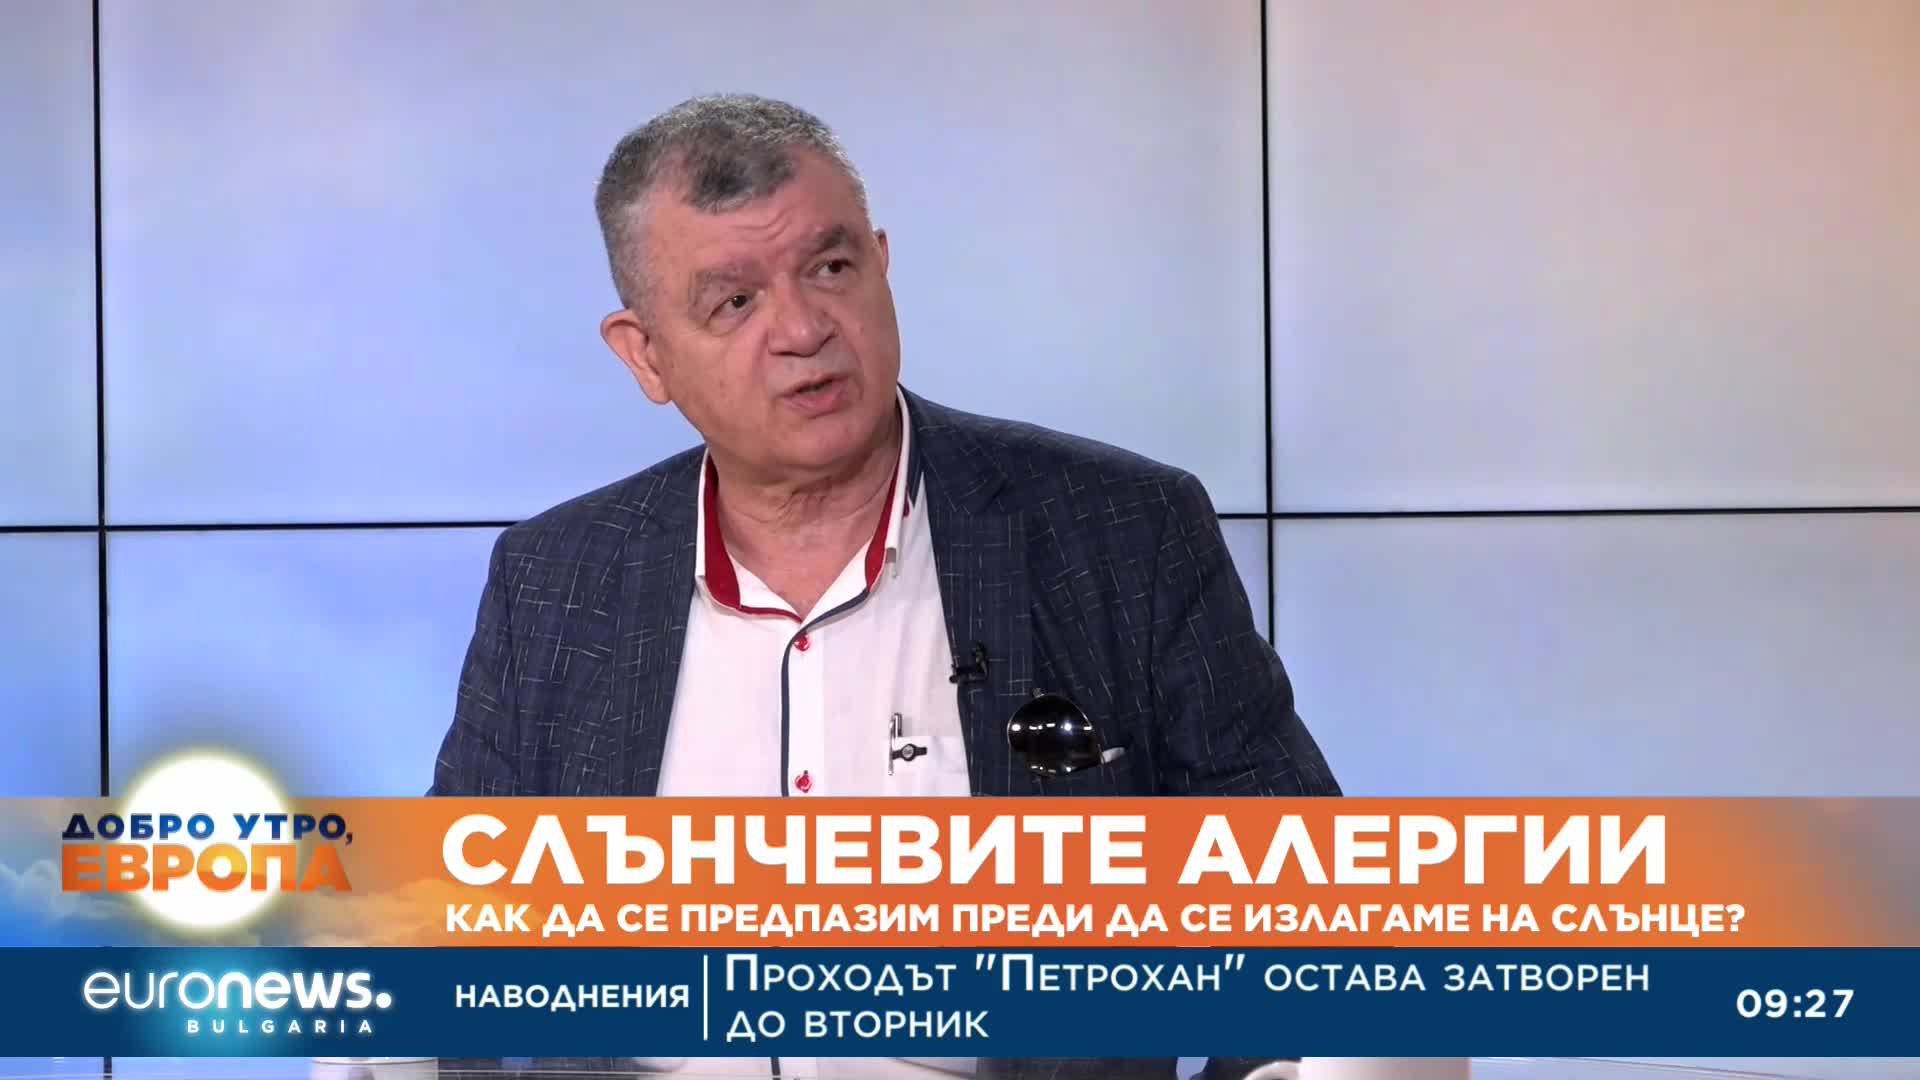 Проф. д-р Тодор Попов, алерголог: Климатичните промени и войната увеличават алергиите